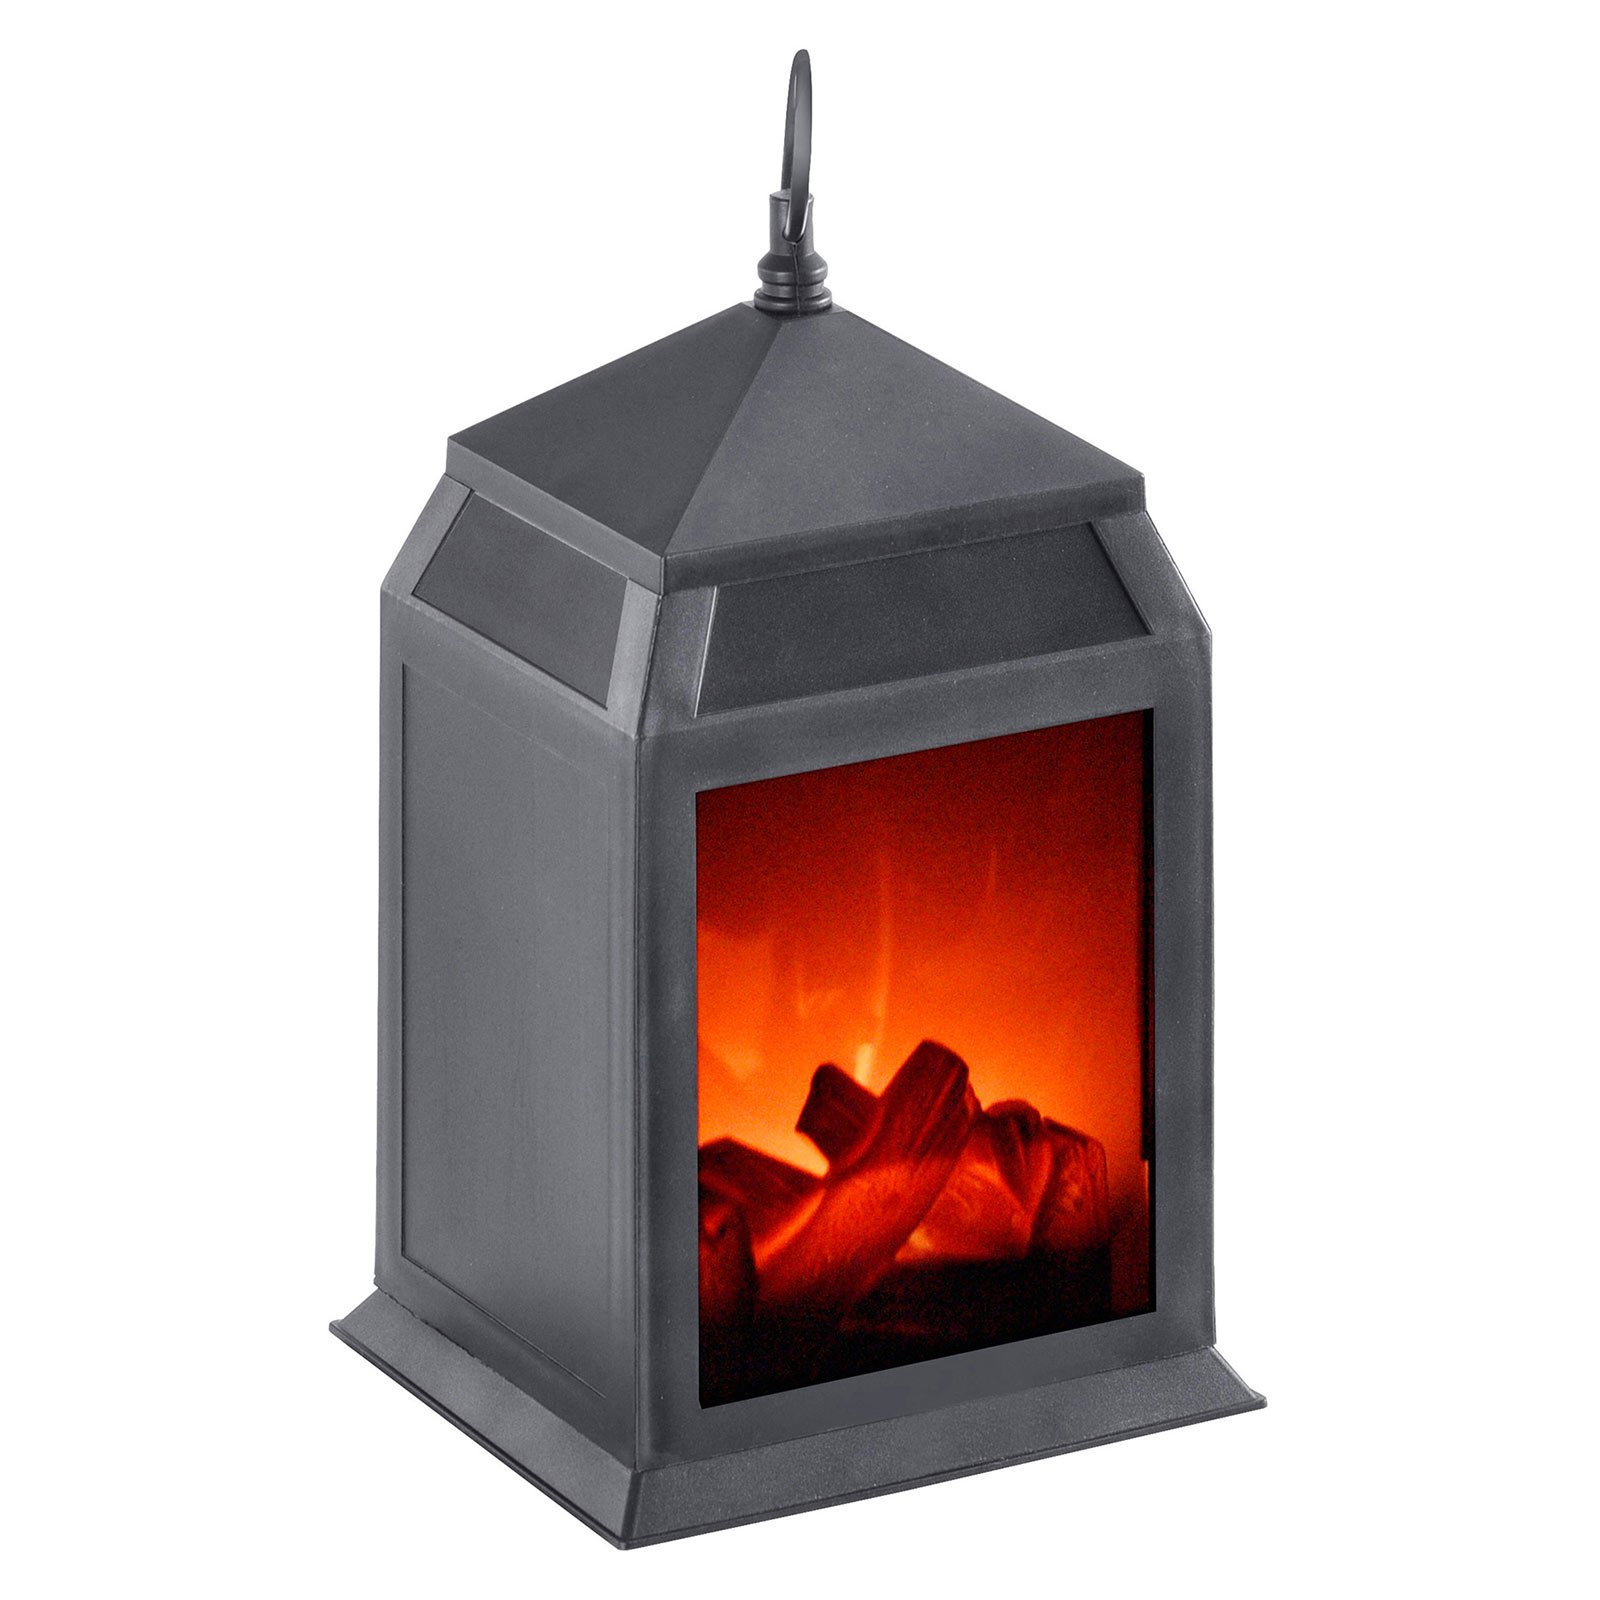 Chimney LED decorative light portable width 15.8cm